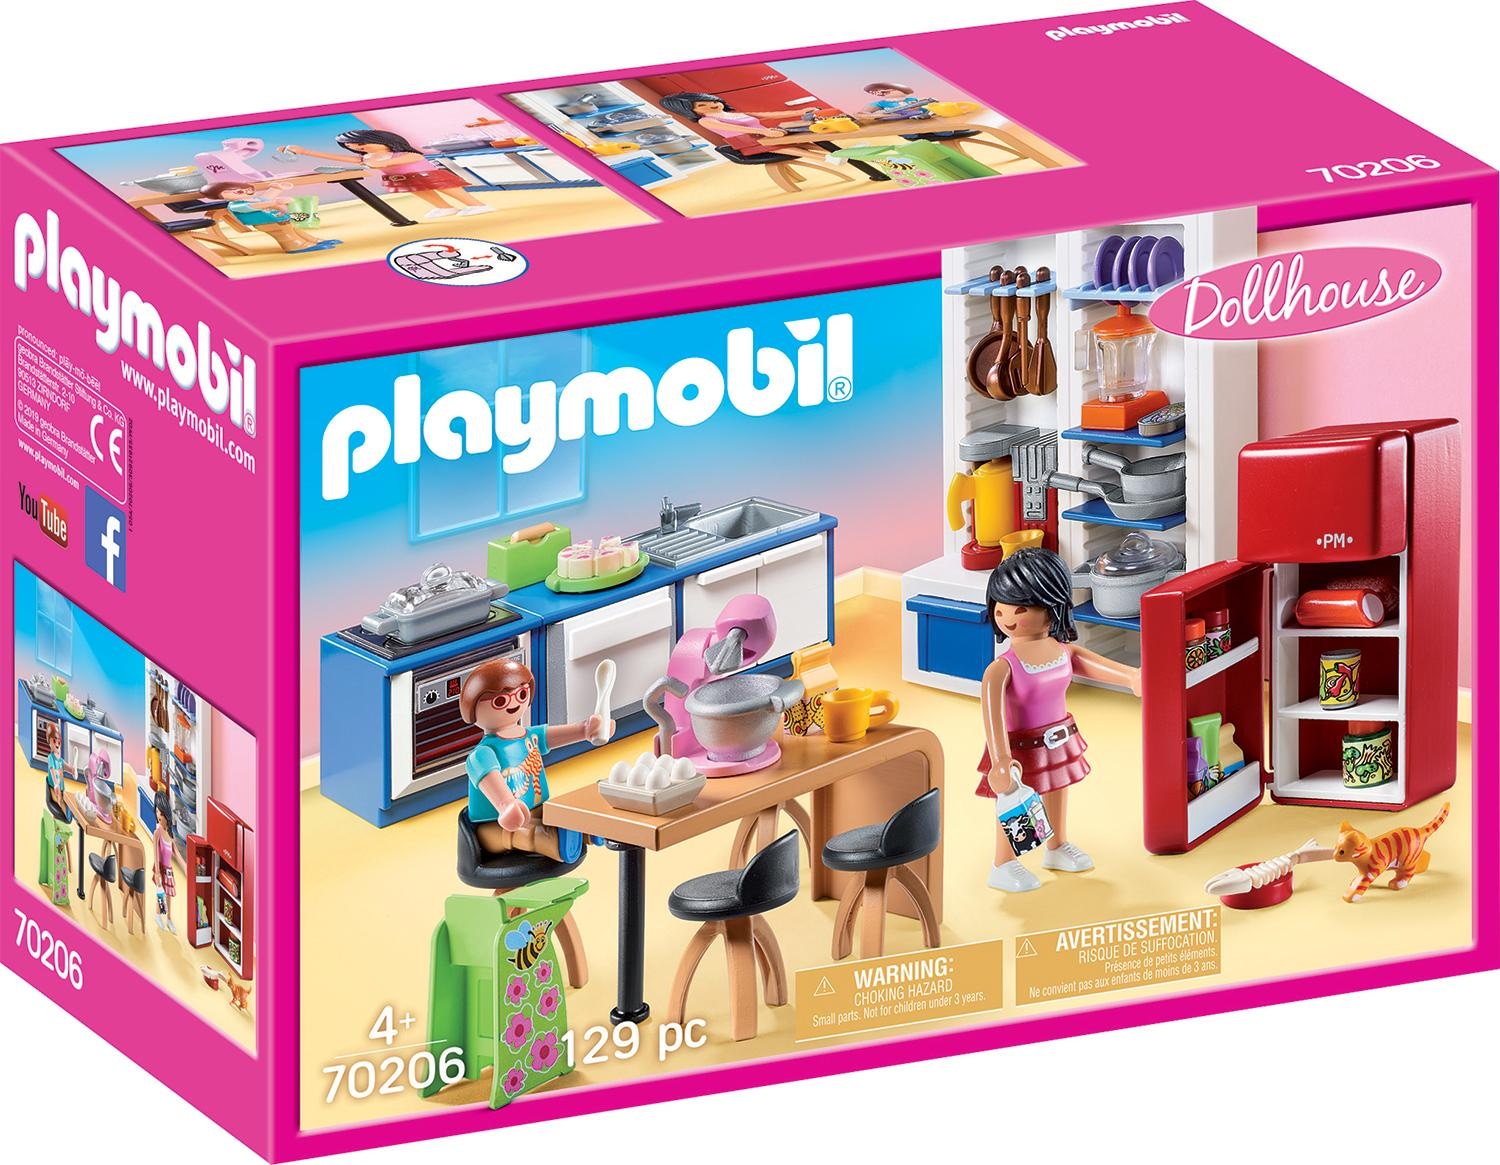 Playmobil® Konstruktions-Spielset »Familienküche (70206), Dollhouse«, (129 St.), Made in Germany